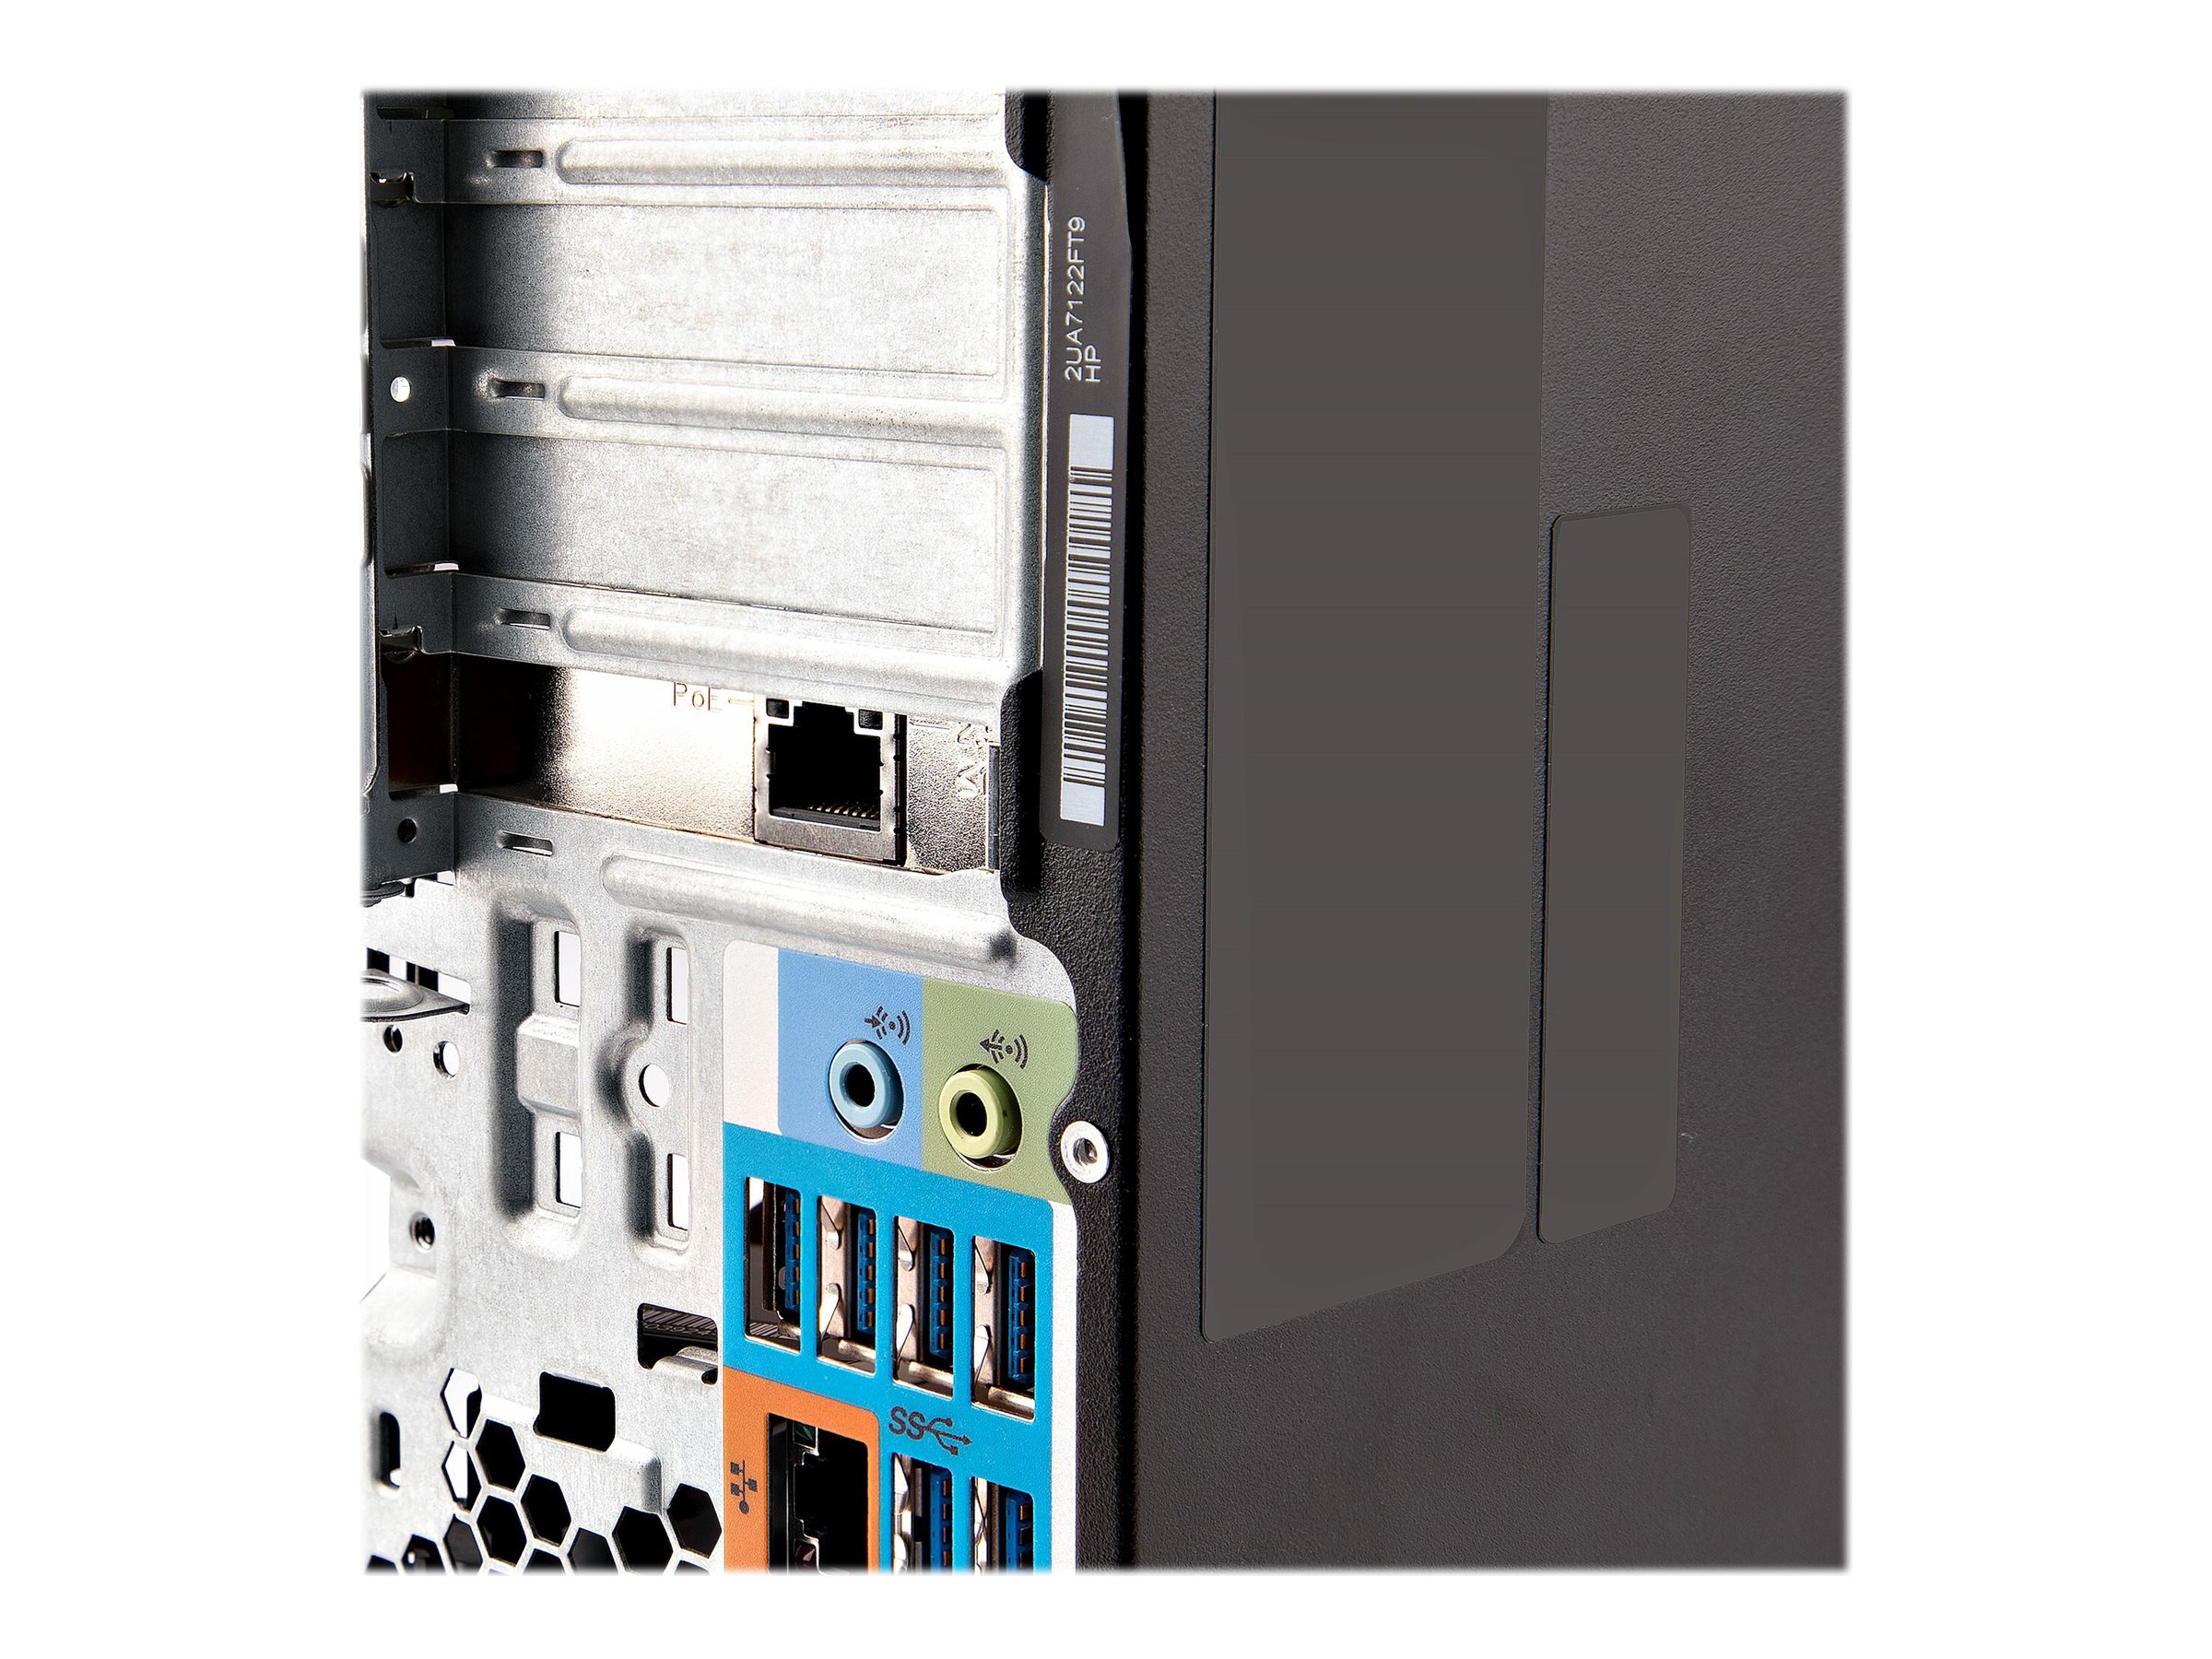 StarTech.com 1 Port 2.5Gbps PoE Network Card, PCIe Ethernet Card w/RJ45 Port, 30W 802.3at PoE NIC for Desktops/Servers, Network PoE LAN Adapter w/Low-Profile Bracket Included - NBASE-T, Windows/Linux Support (ST1000PEXPSE)